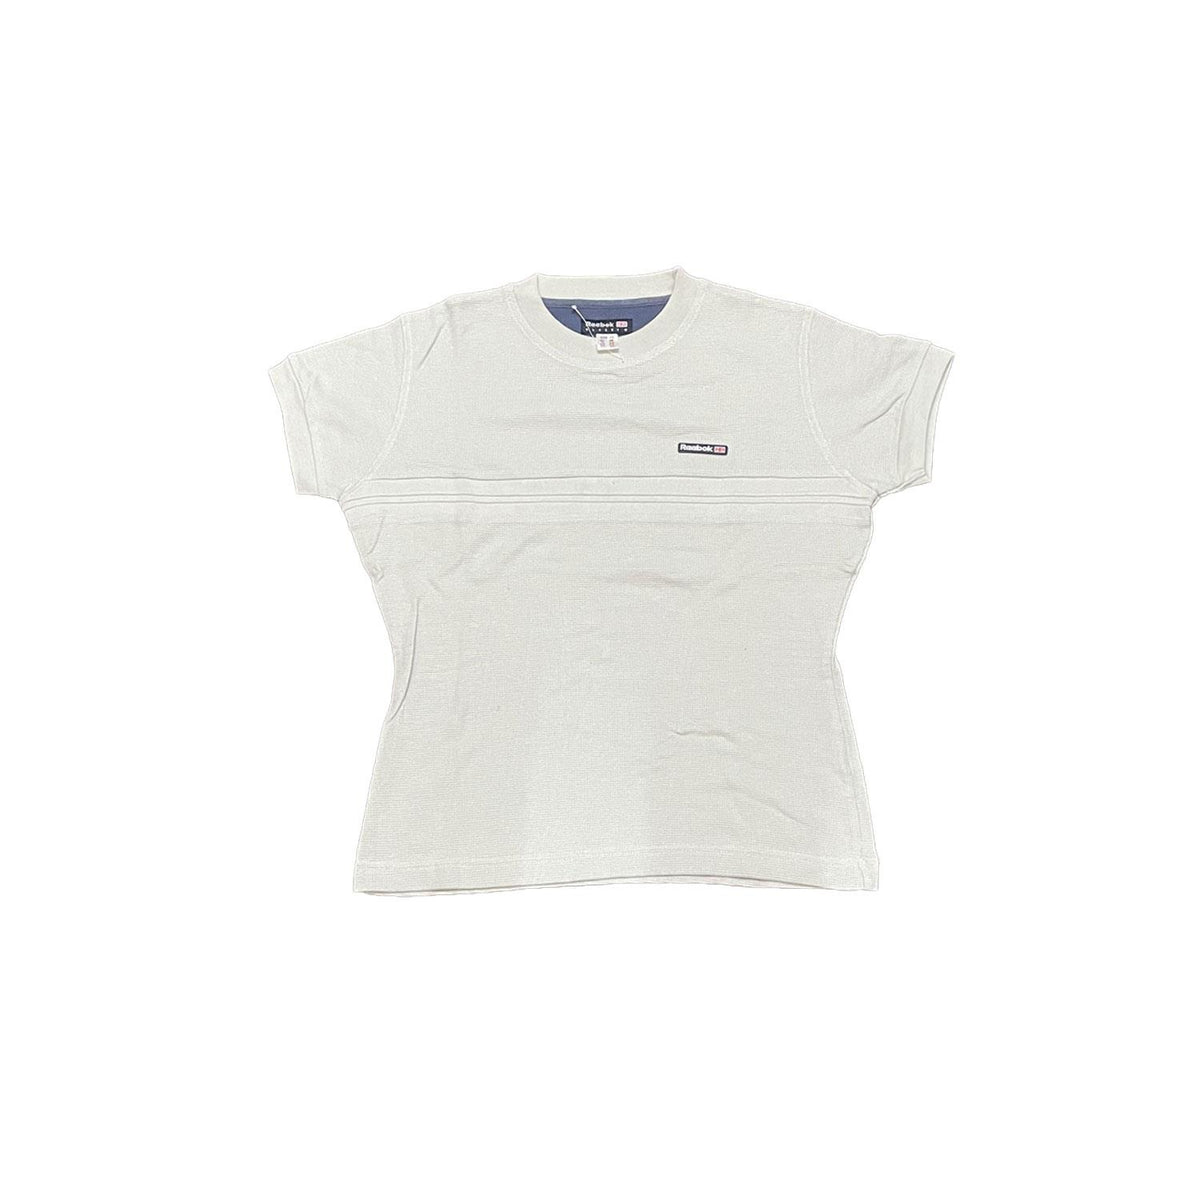 Reebok Original Women's British Logo T-shirt - Off-White - Size 12